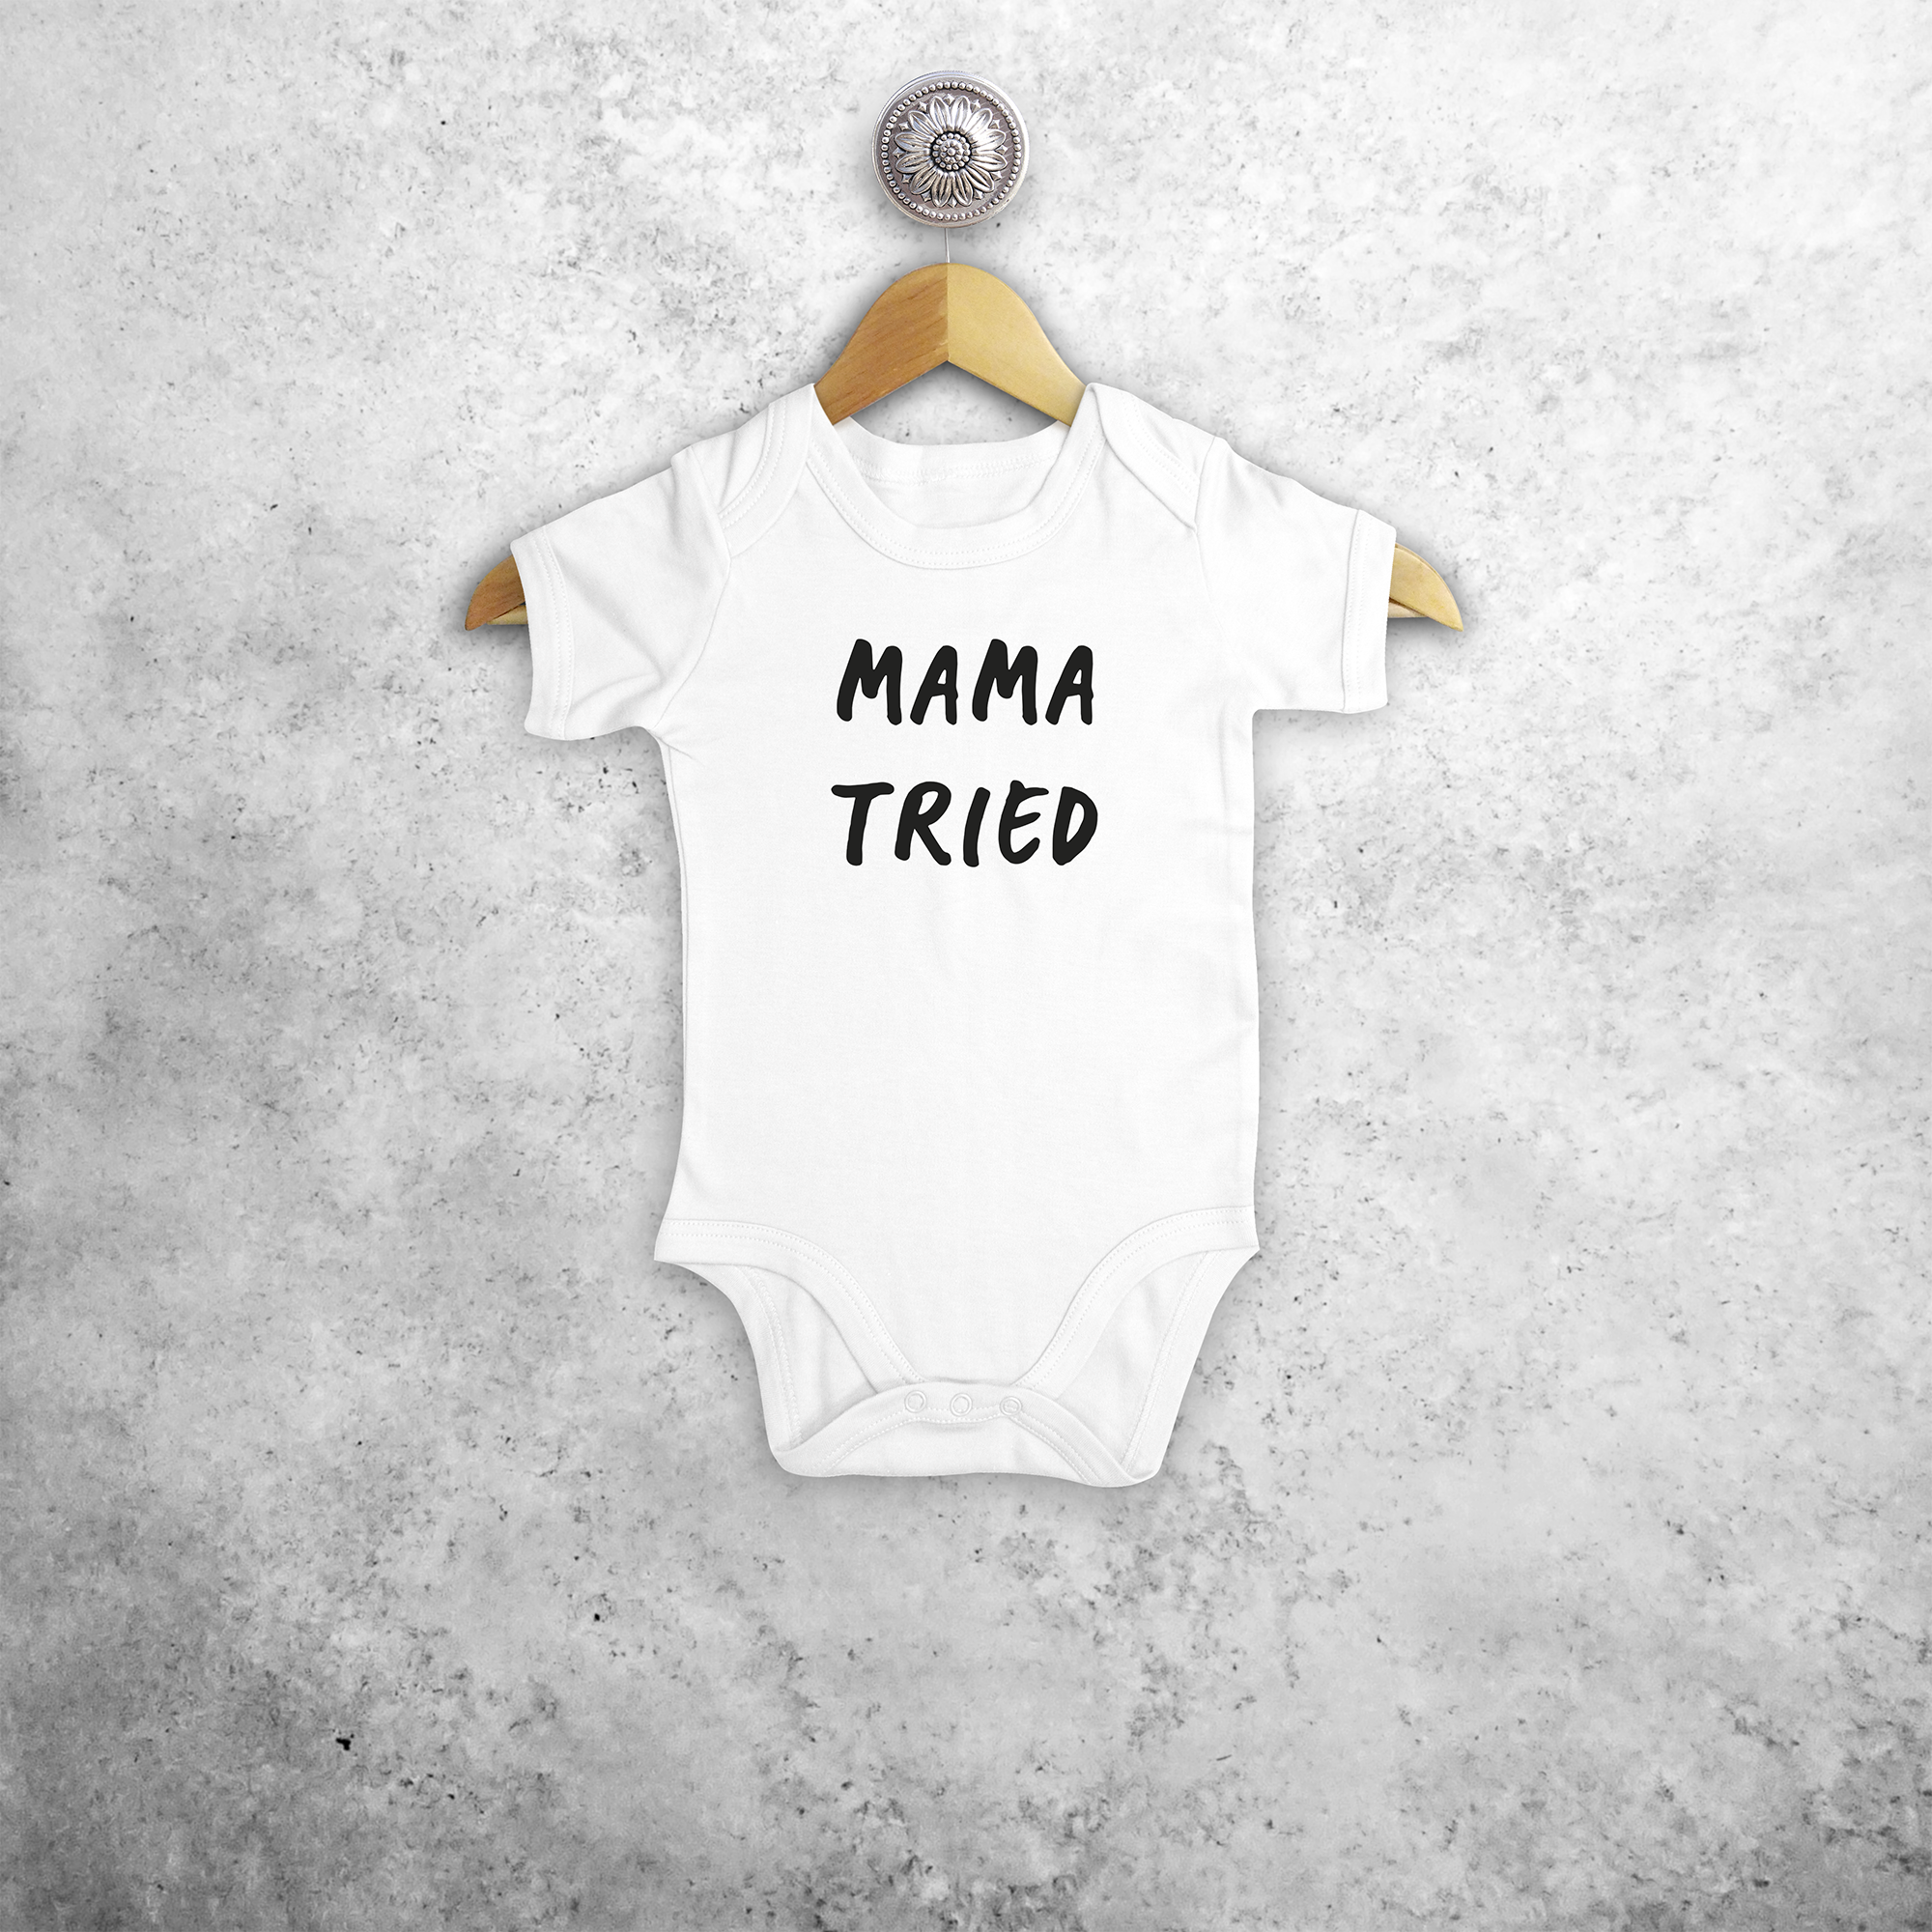 'Mama tried' baby shortsleeve bodysuit